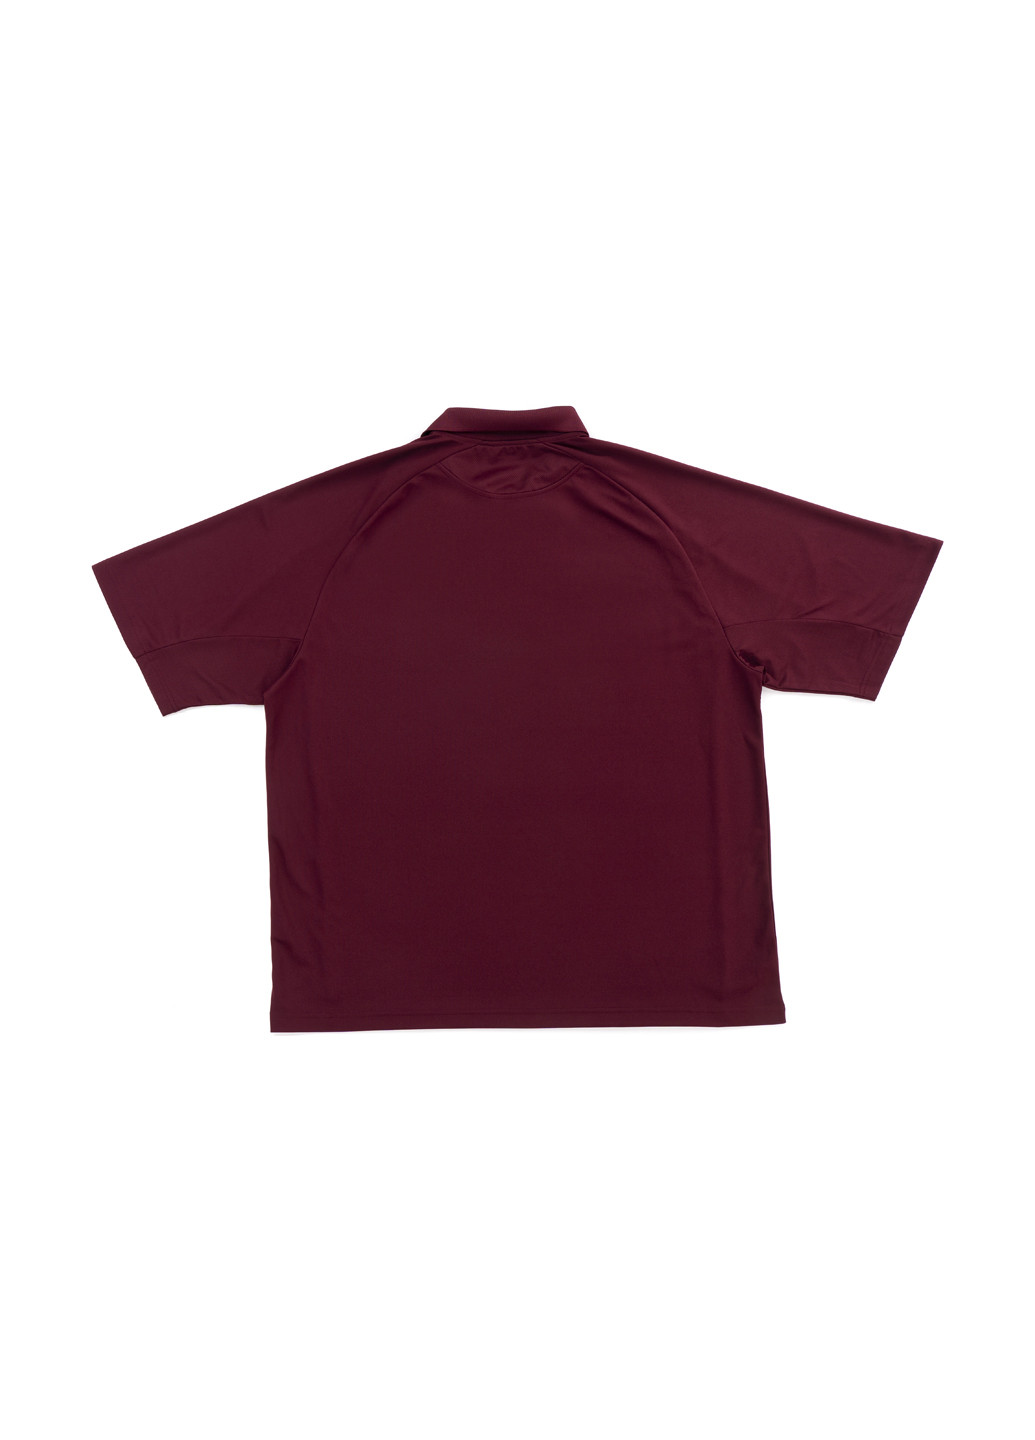 Бордовая футболка-поло для мужчин SPORT TEK однотонная